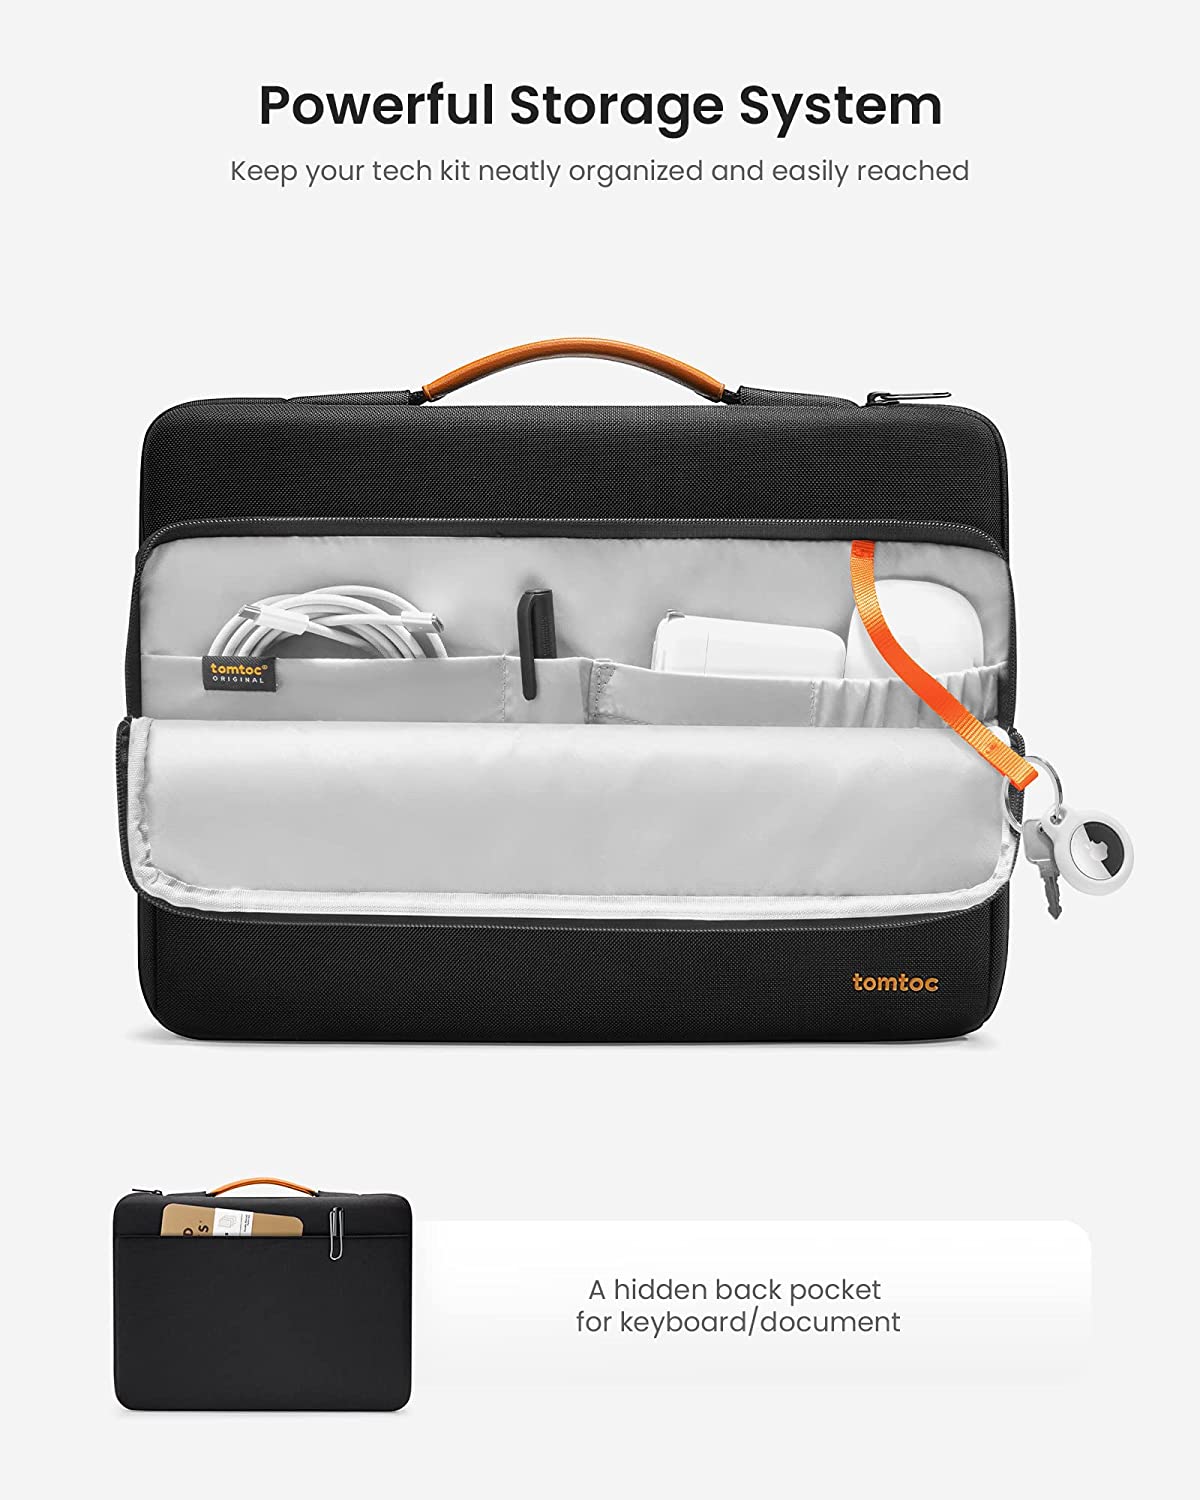 Tomtoc Defender-A14 Laptop Handbag 14-inch - Black